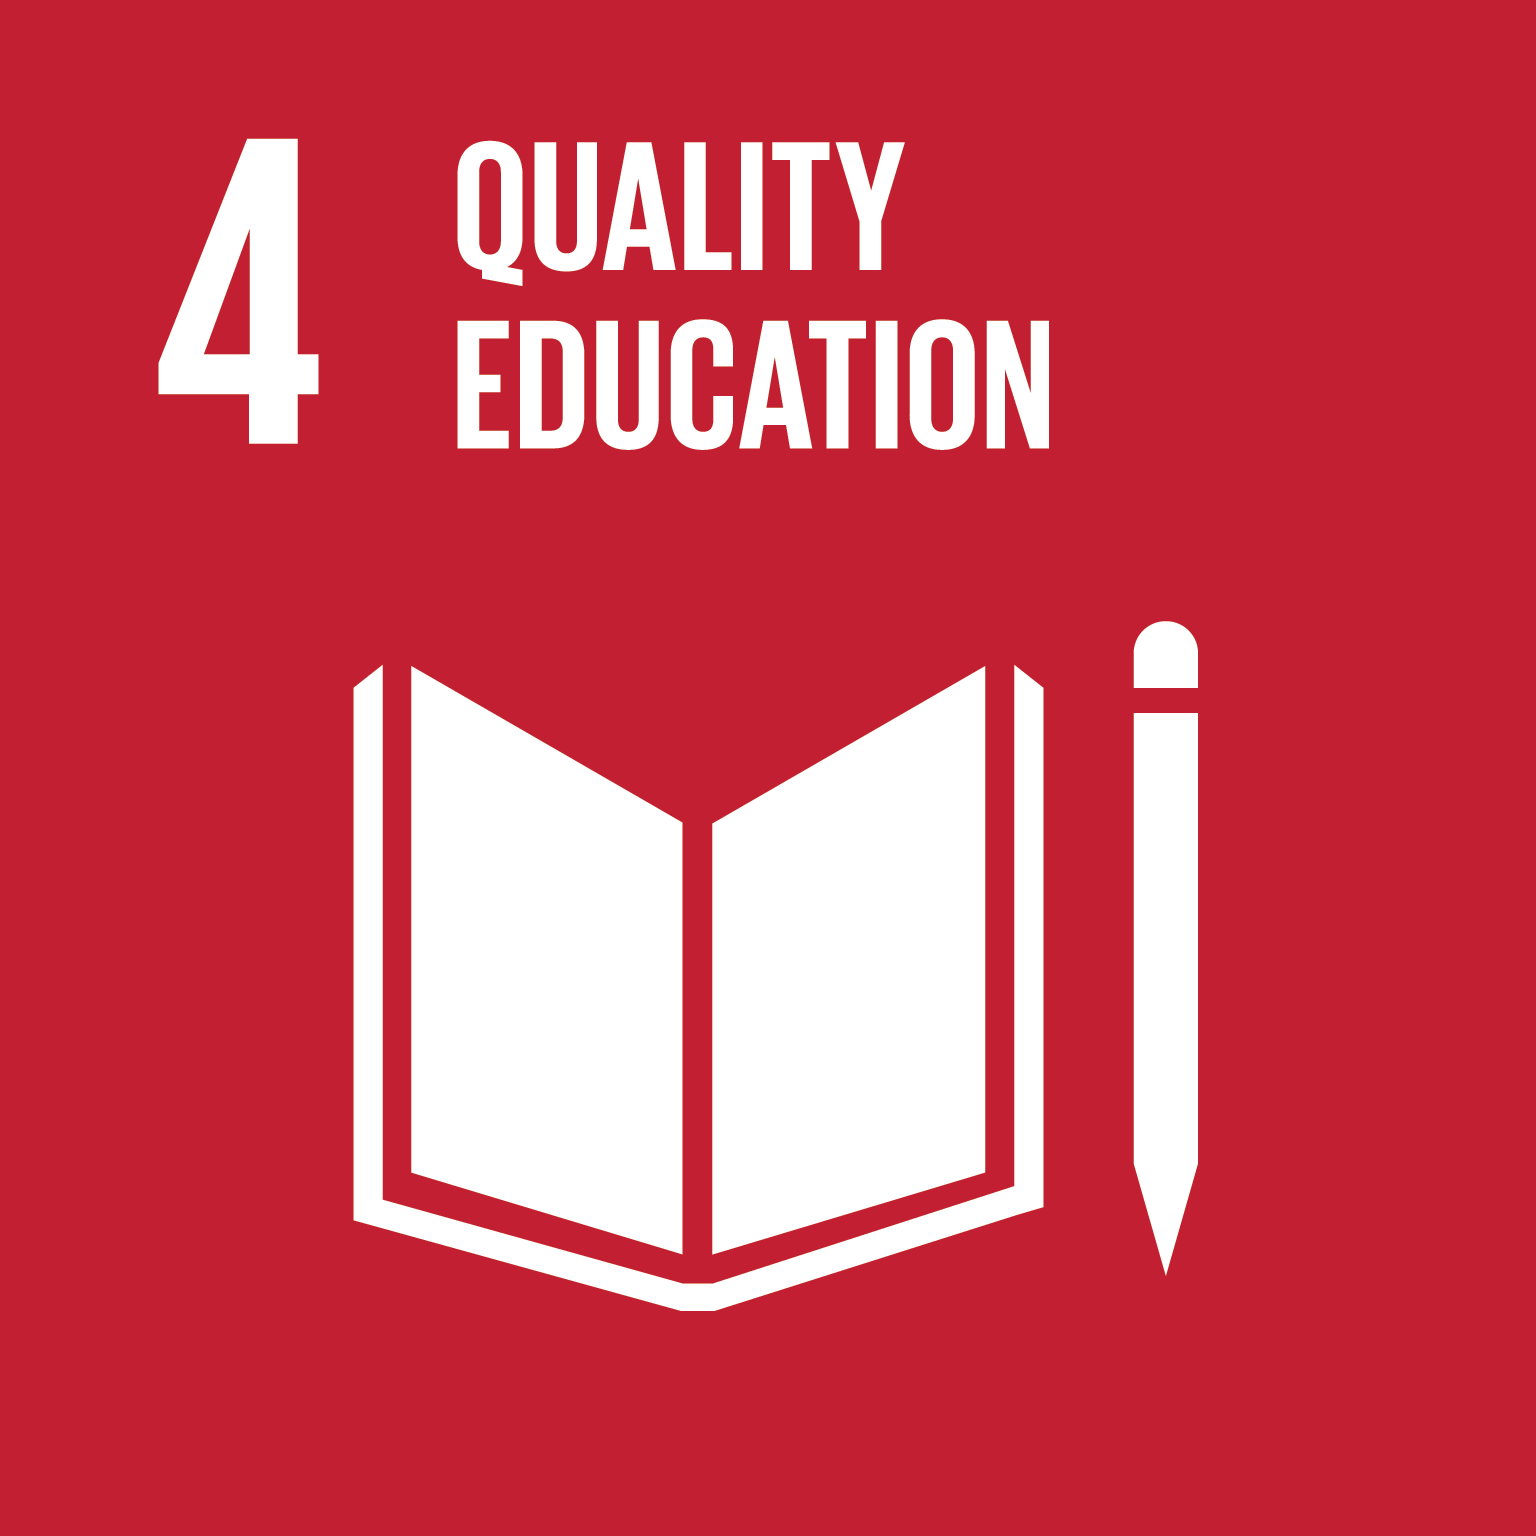 sustainable development goal 4 icon quality education